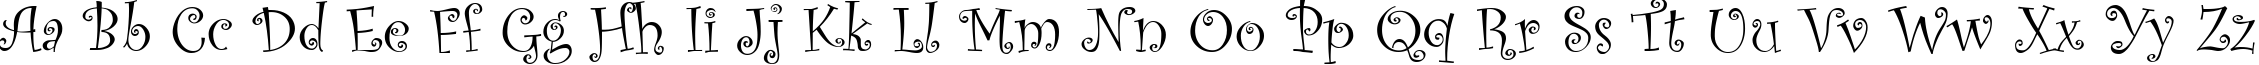 Пример написания английского алфавита шрифтом Old Comedy